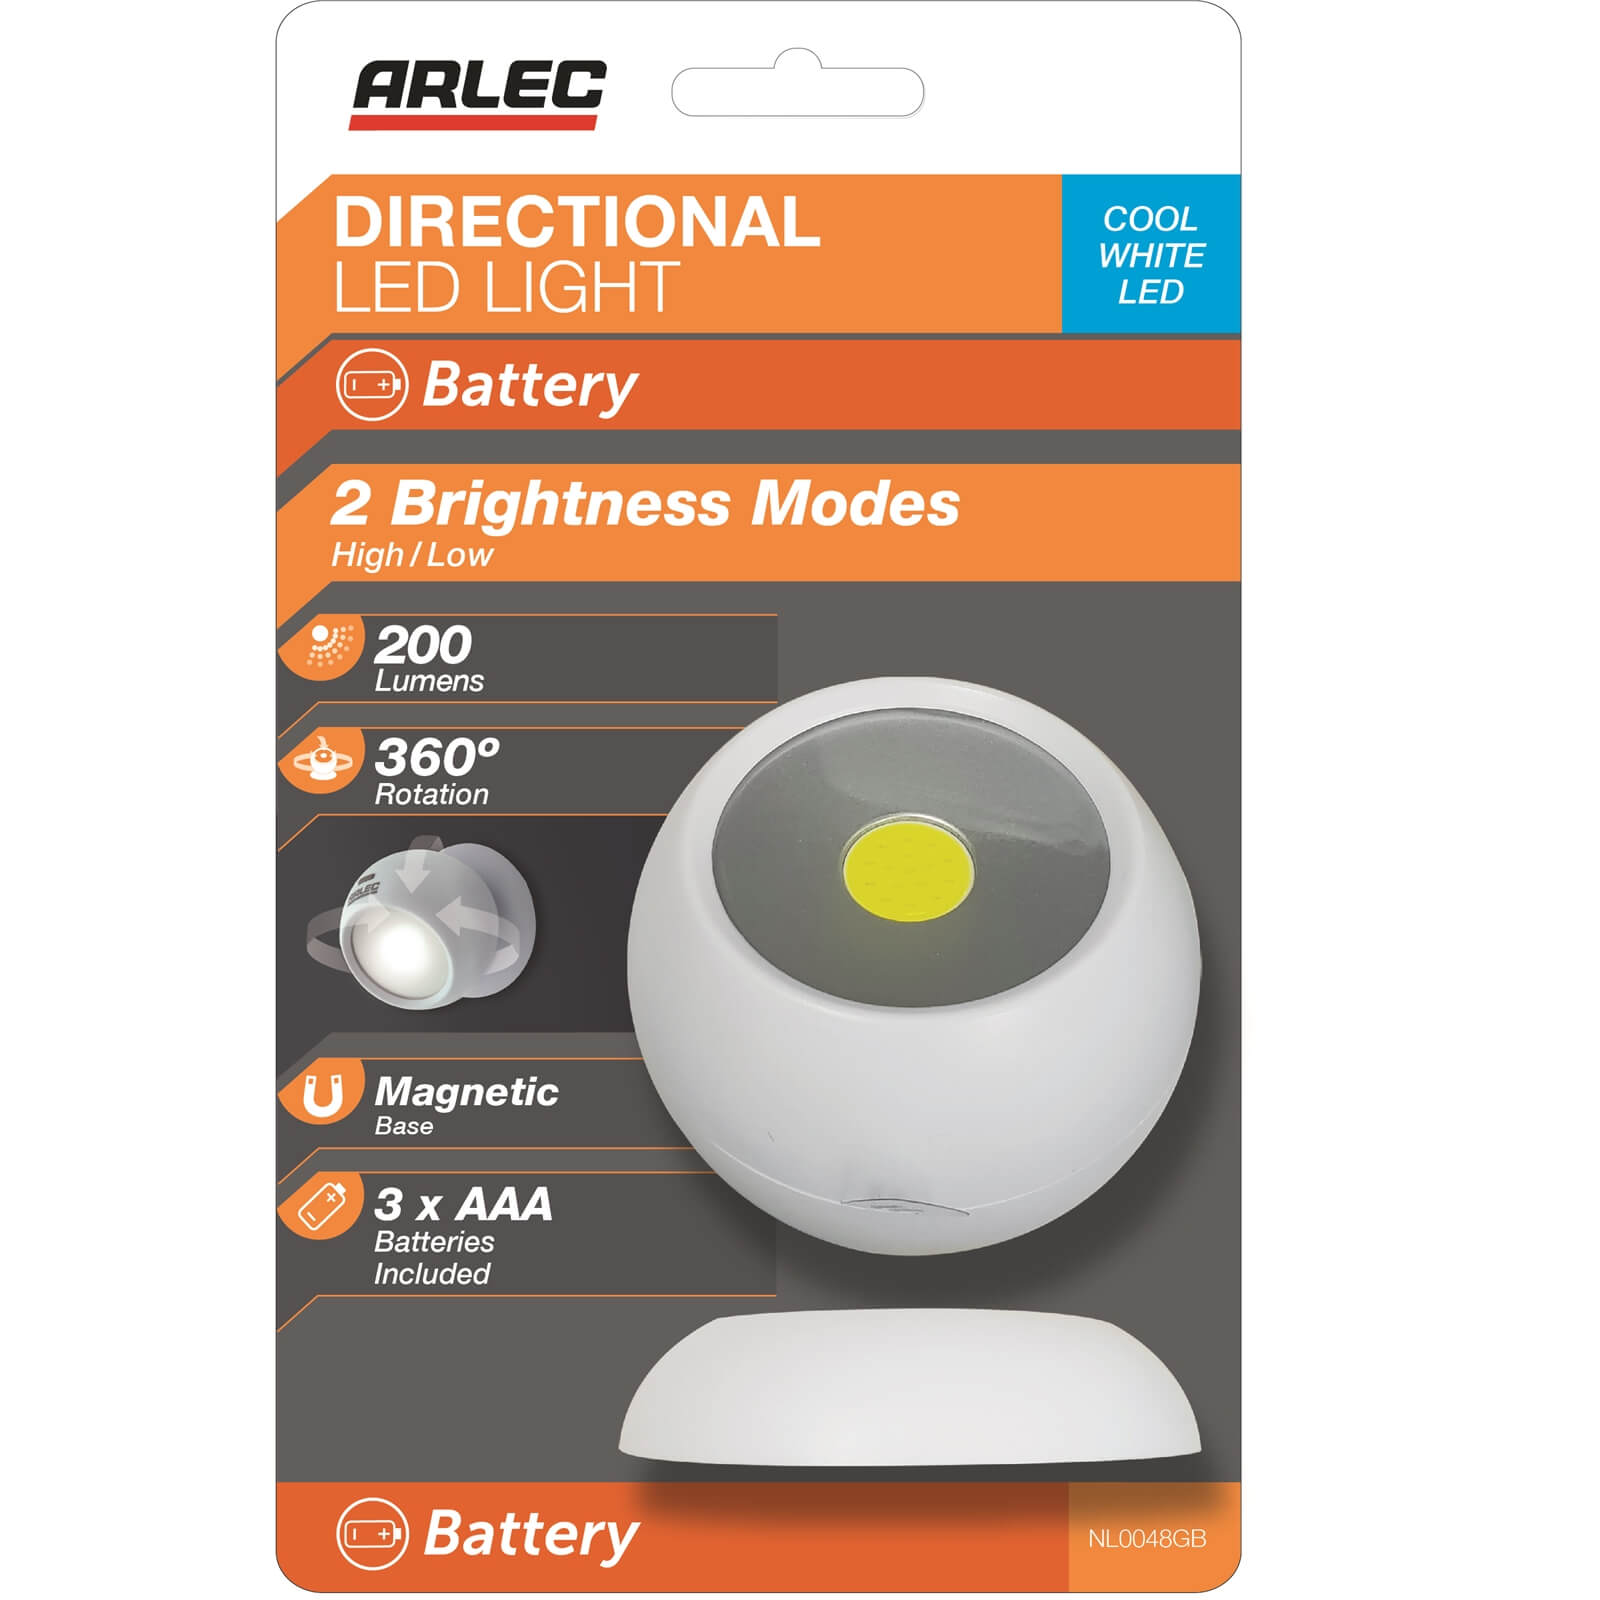 Arlec Directional LED Light